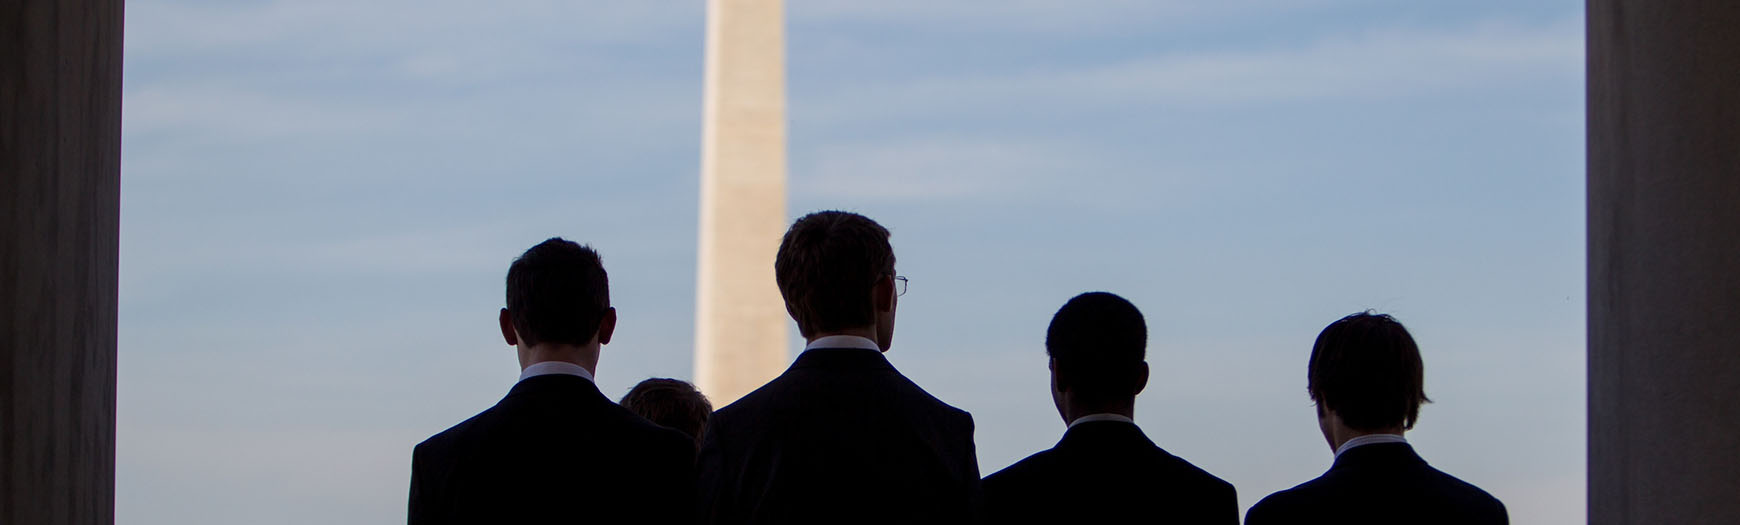 Senate Youth delegates with the Washington Monument in the background, Washington, DC